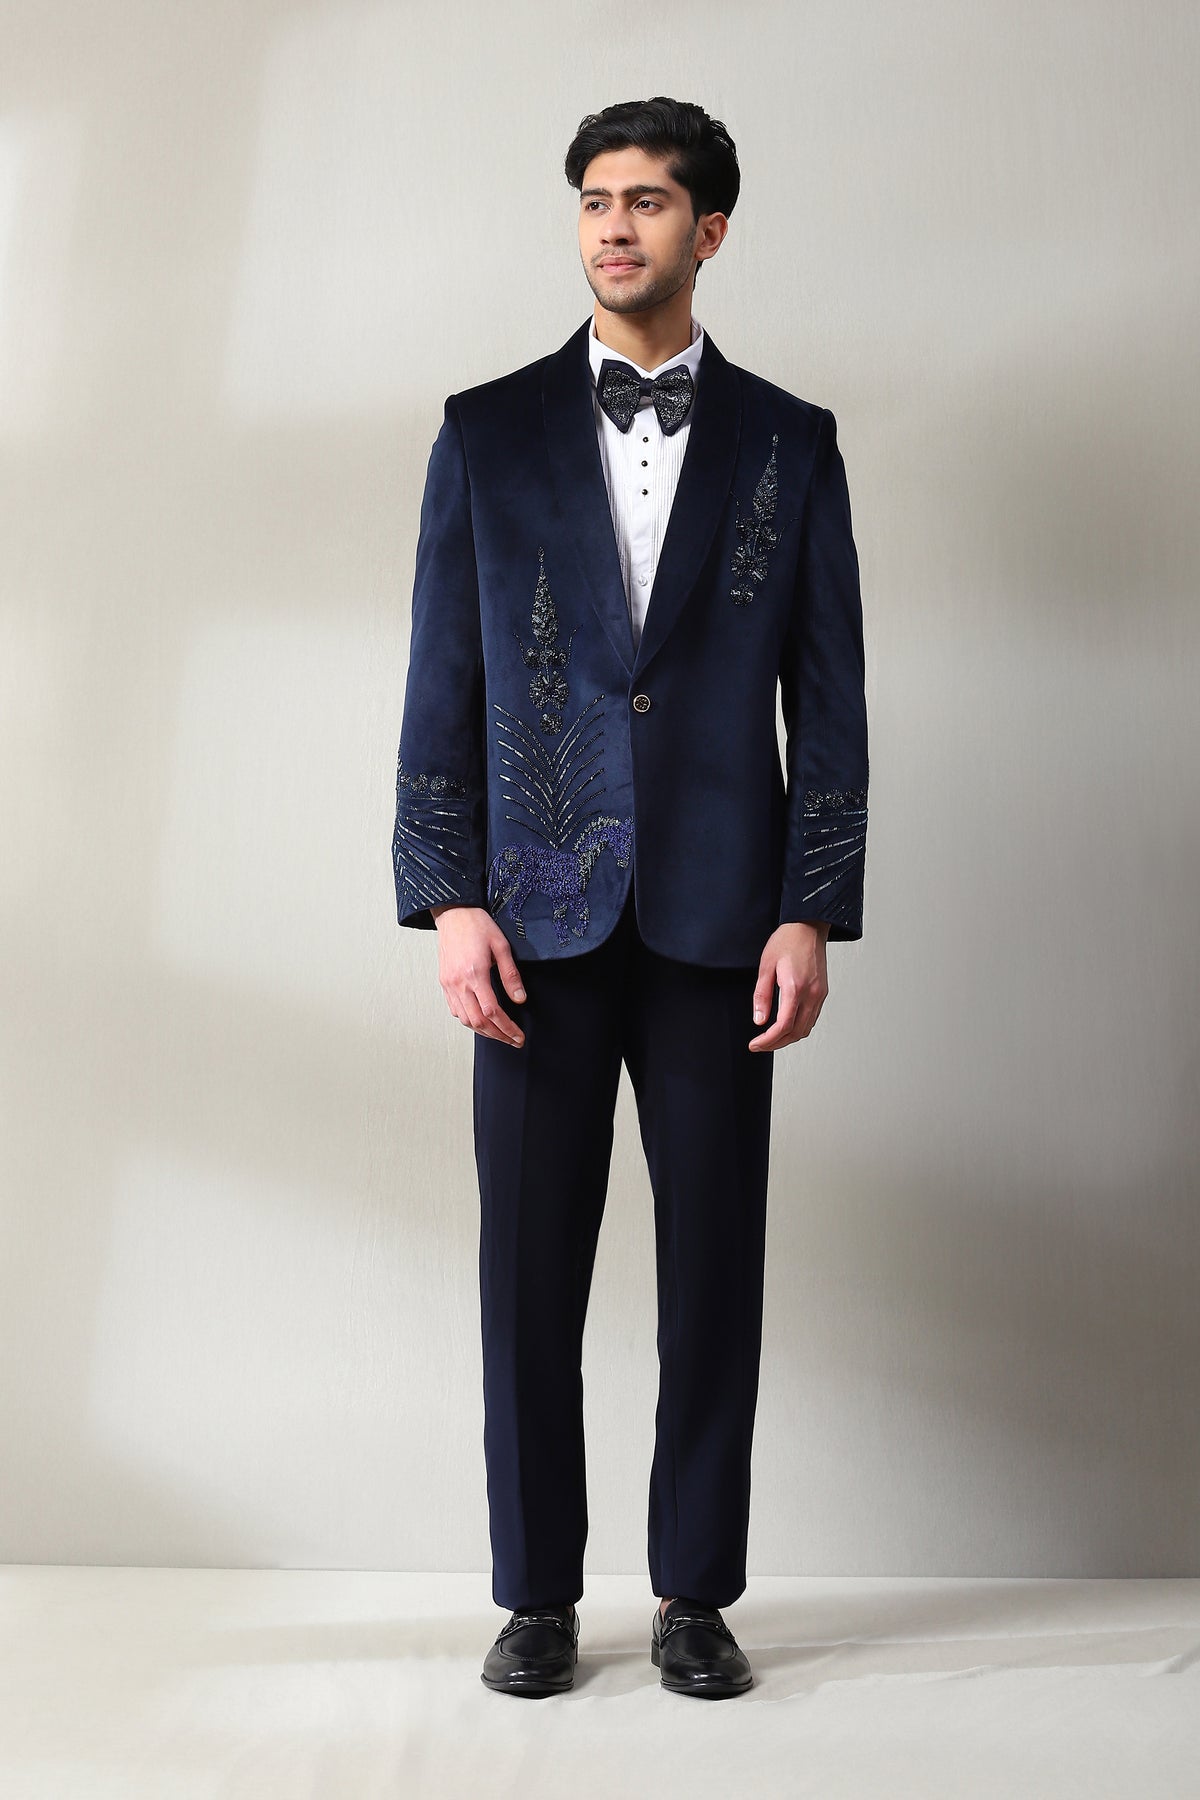 This velvet silk navy blue tuxedo is adorned with bead sarvoski and hand work